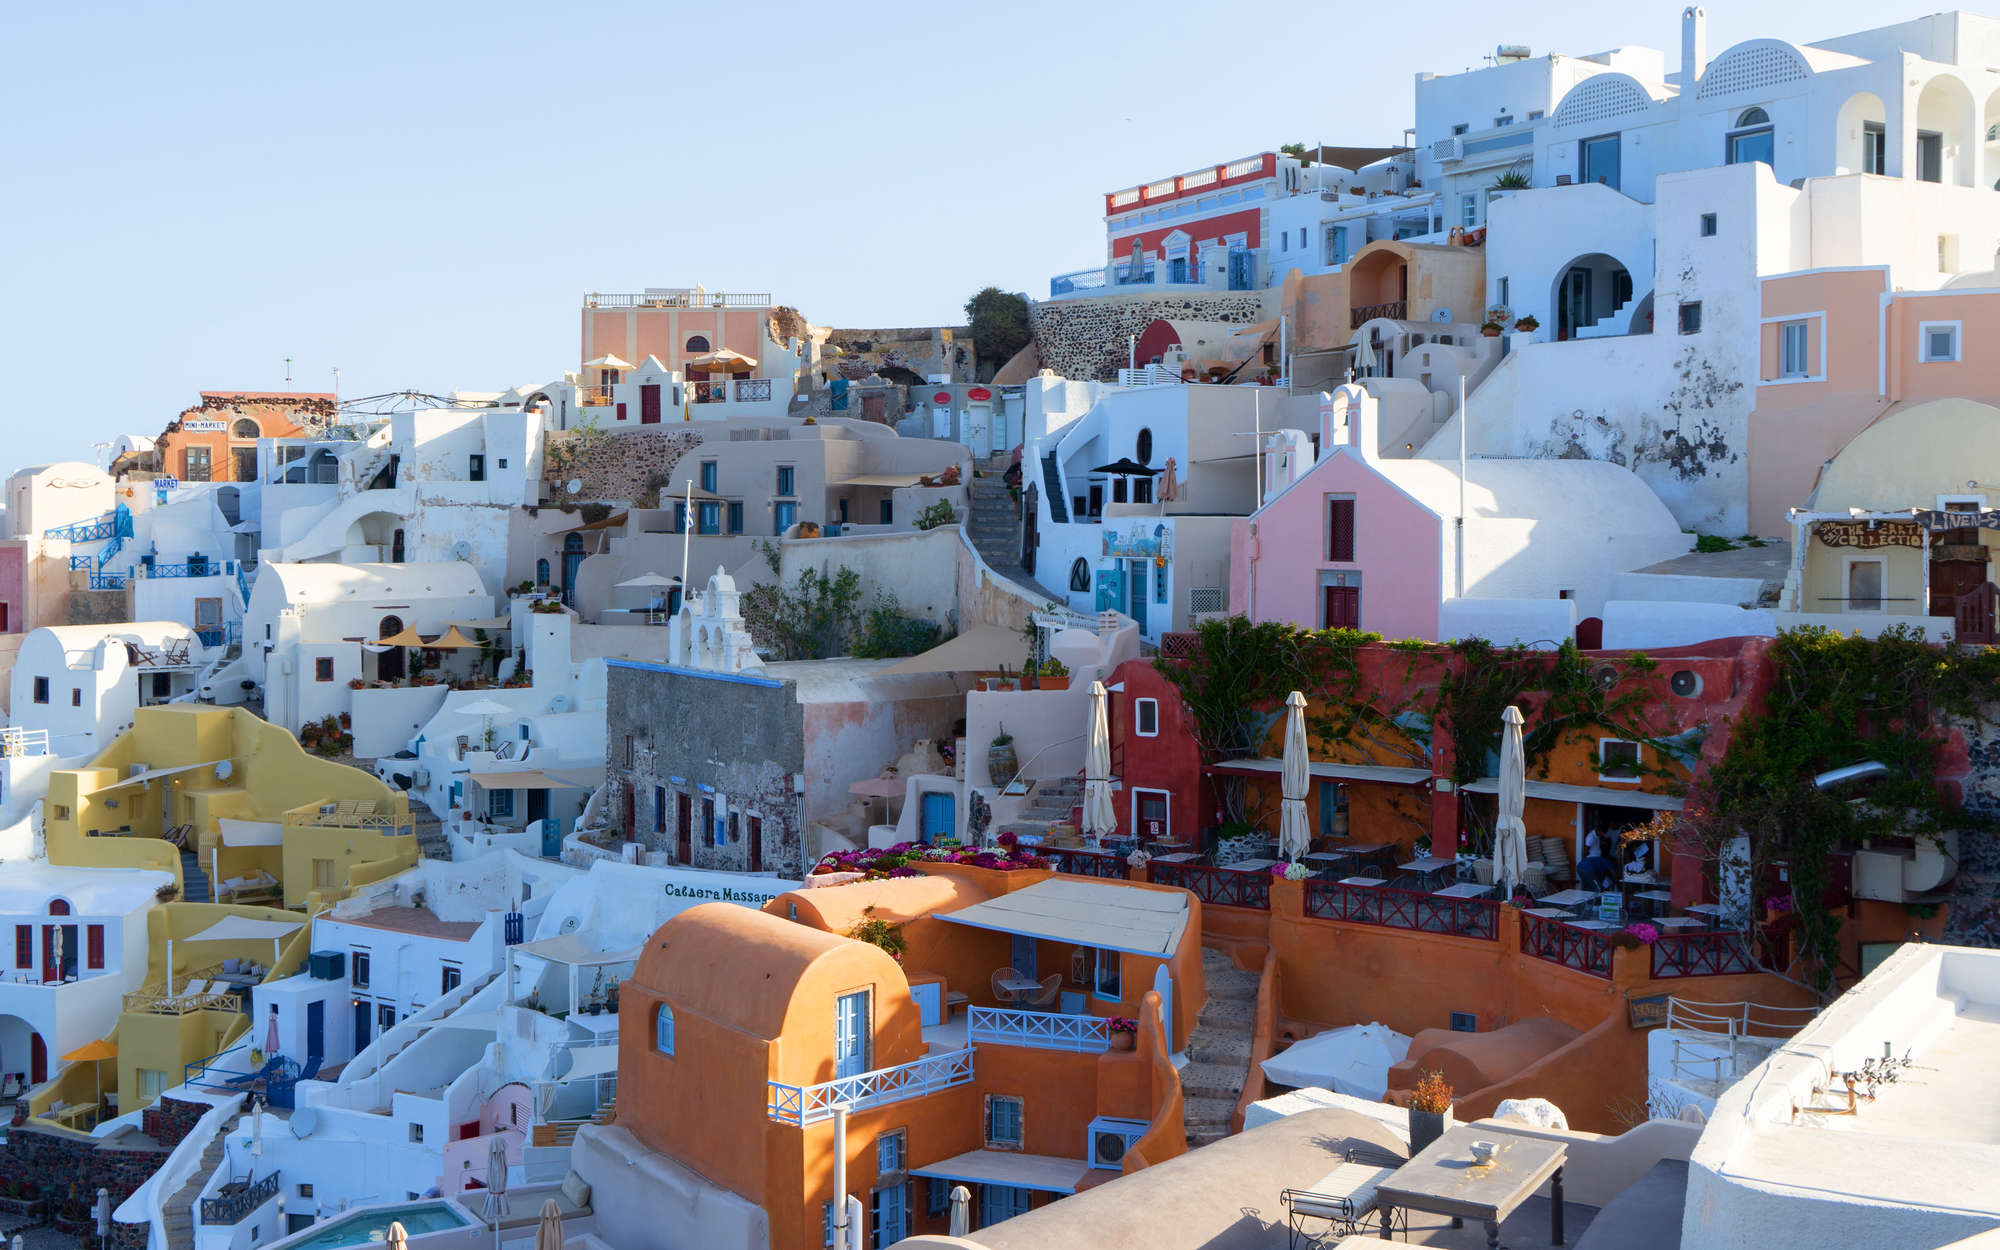             Santorini huizen muurschildering - parelmoer glad vlies
        